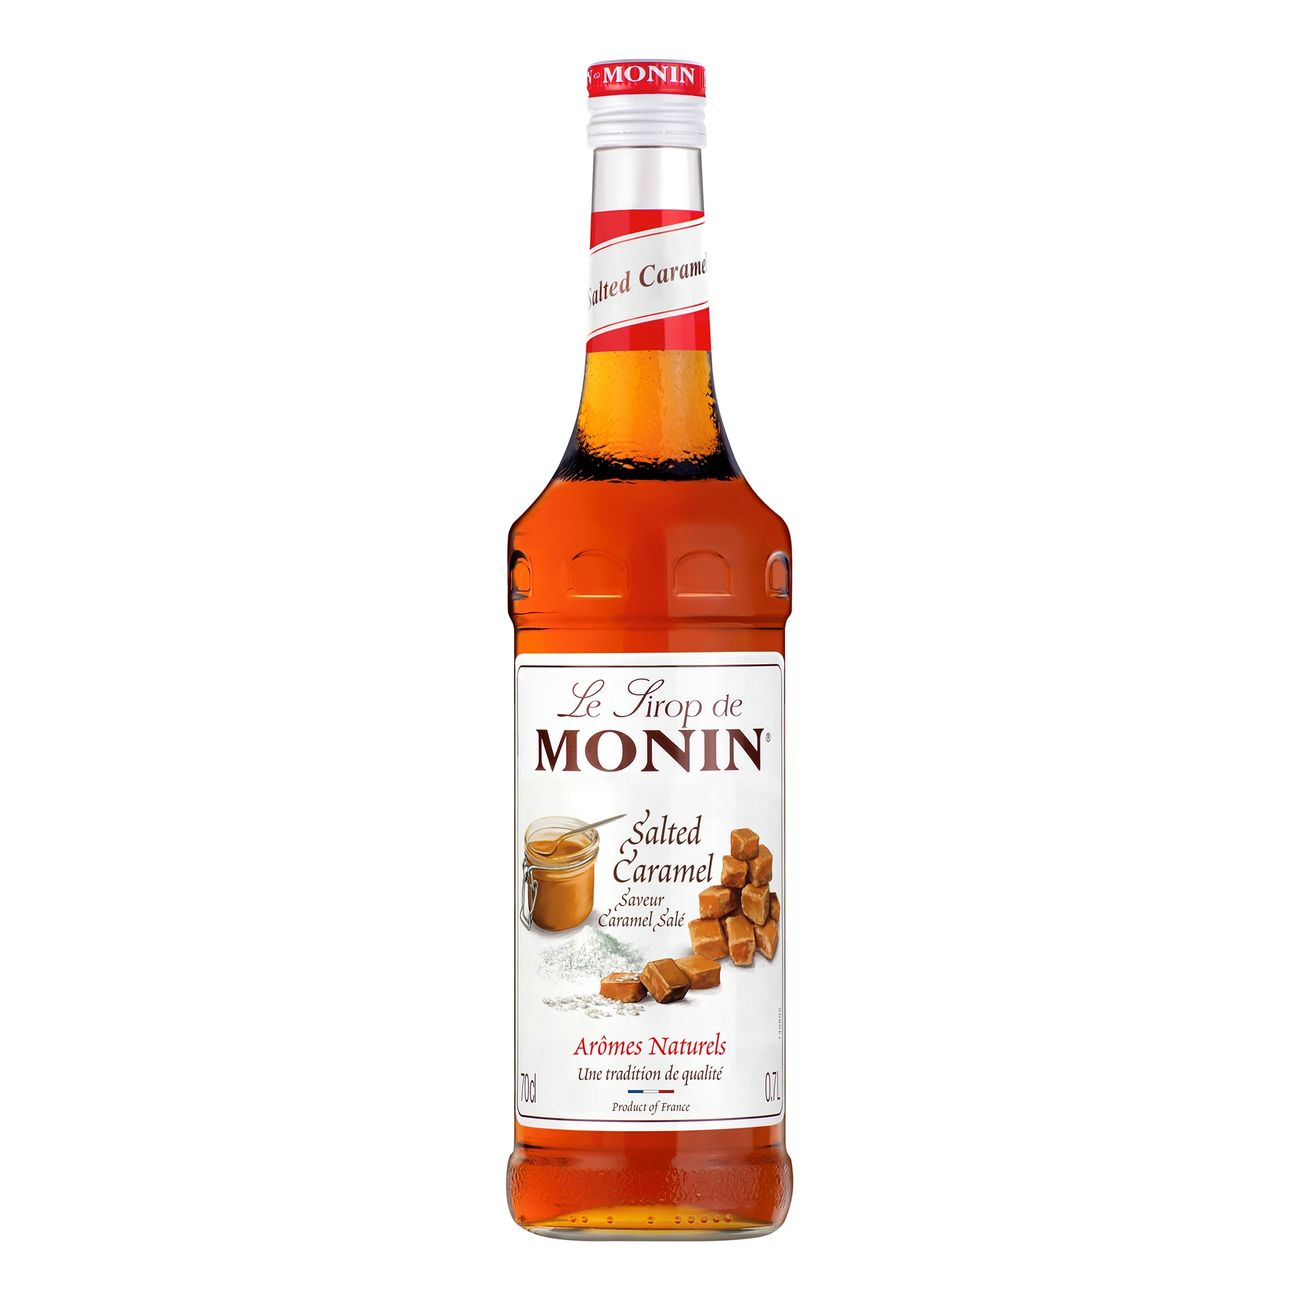 monin-salted-caramel-syrup-70677-3